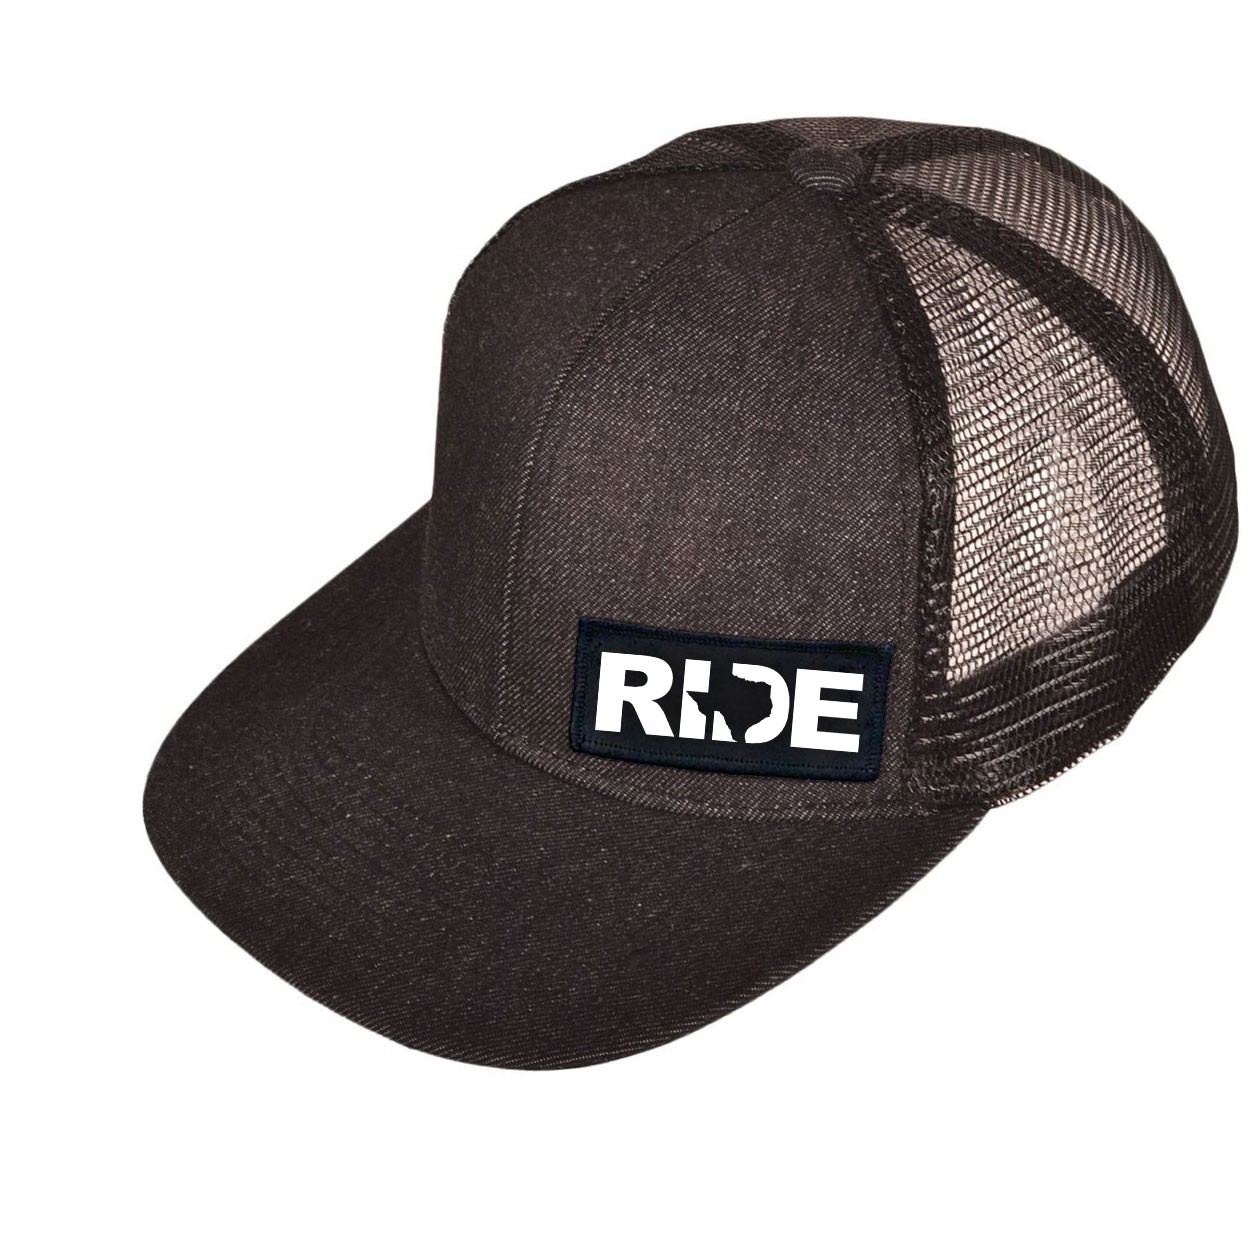 Ride Texas Night Out Woven Patch Snapback Flat Brim Hat Black Denim (White Logo)